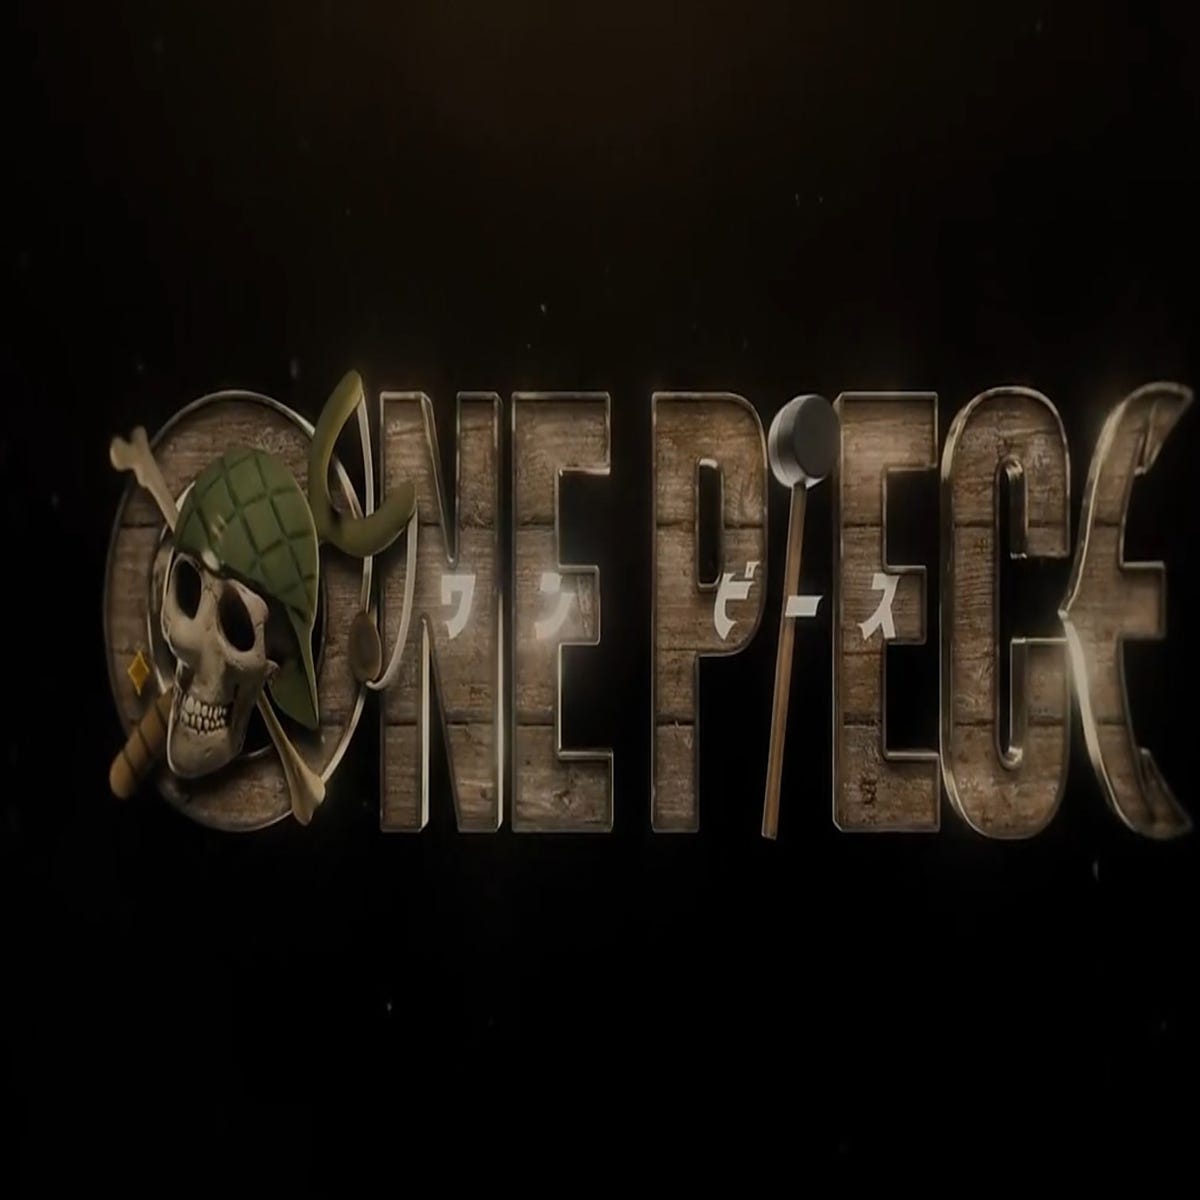 One Piece: Netflix divulga logo e título do 1º episódio do live action;  confira - Zoeira - Diário do Nordeste